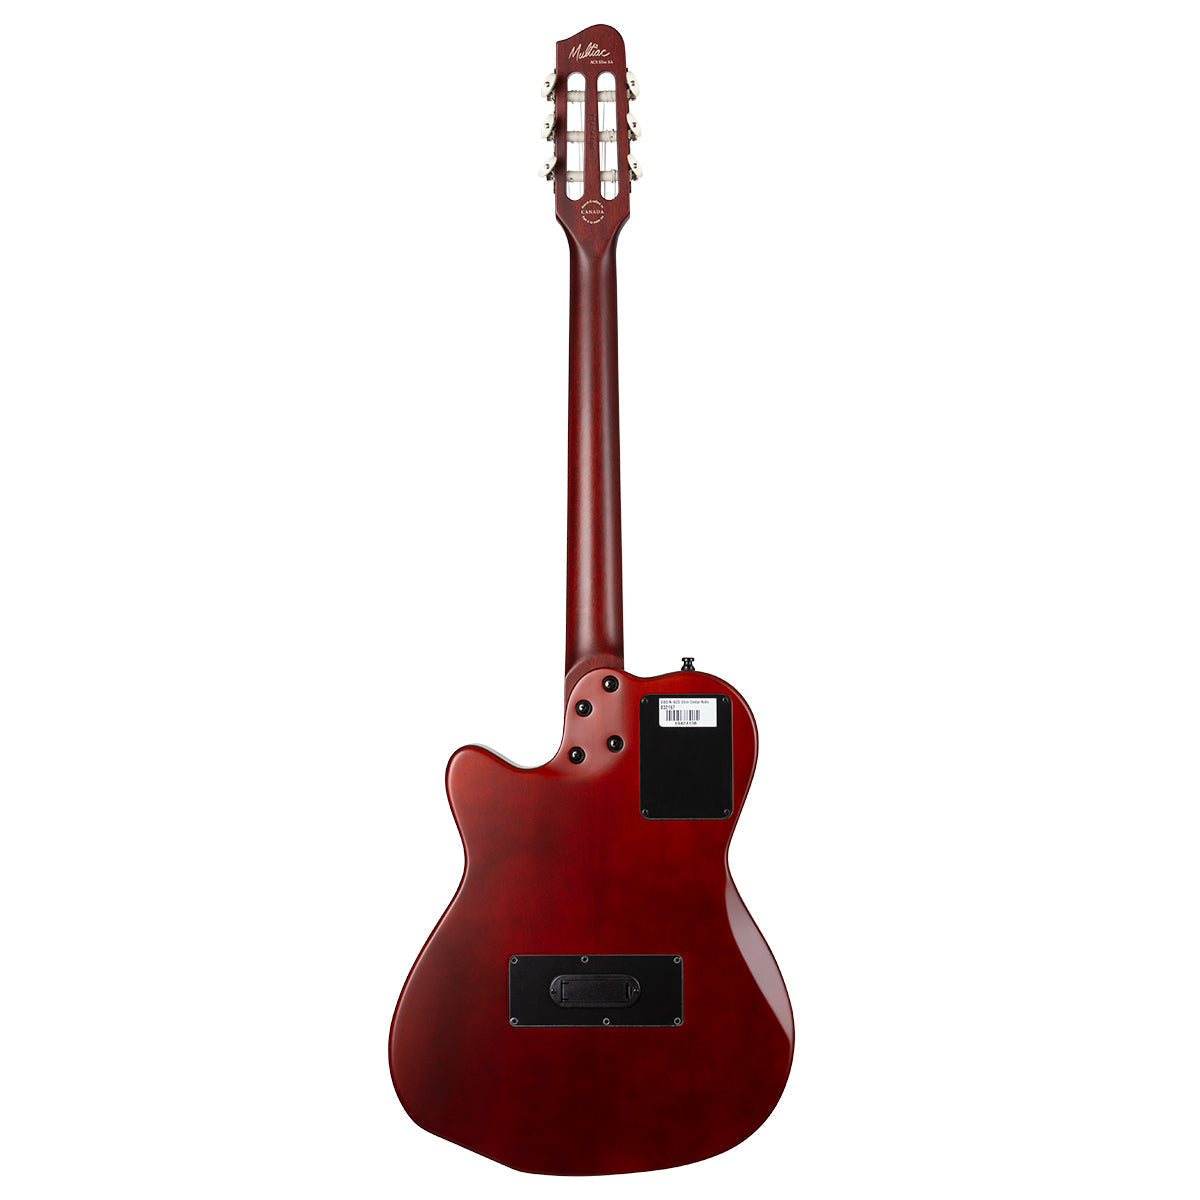 Godin ACS Slim Nylon 2 Voice Guitar ~ Cedar Natural, Electric Guitar for sale at Richards Guitars.